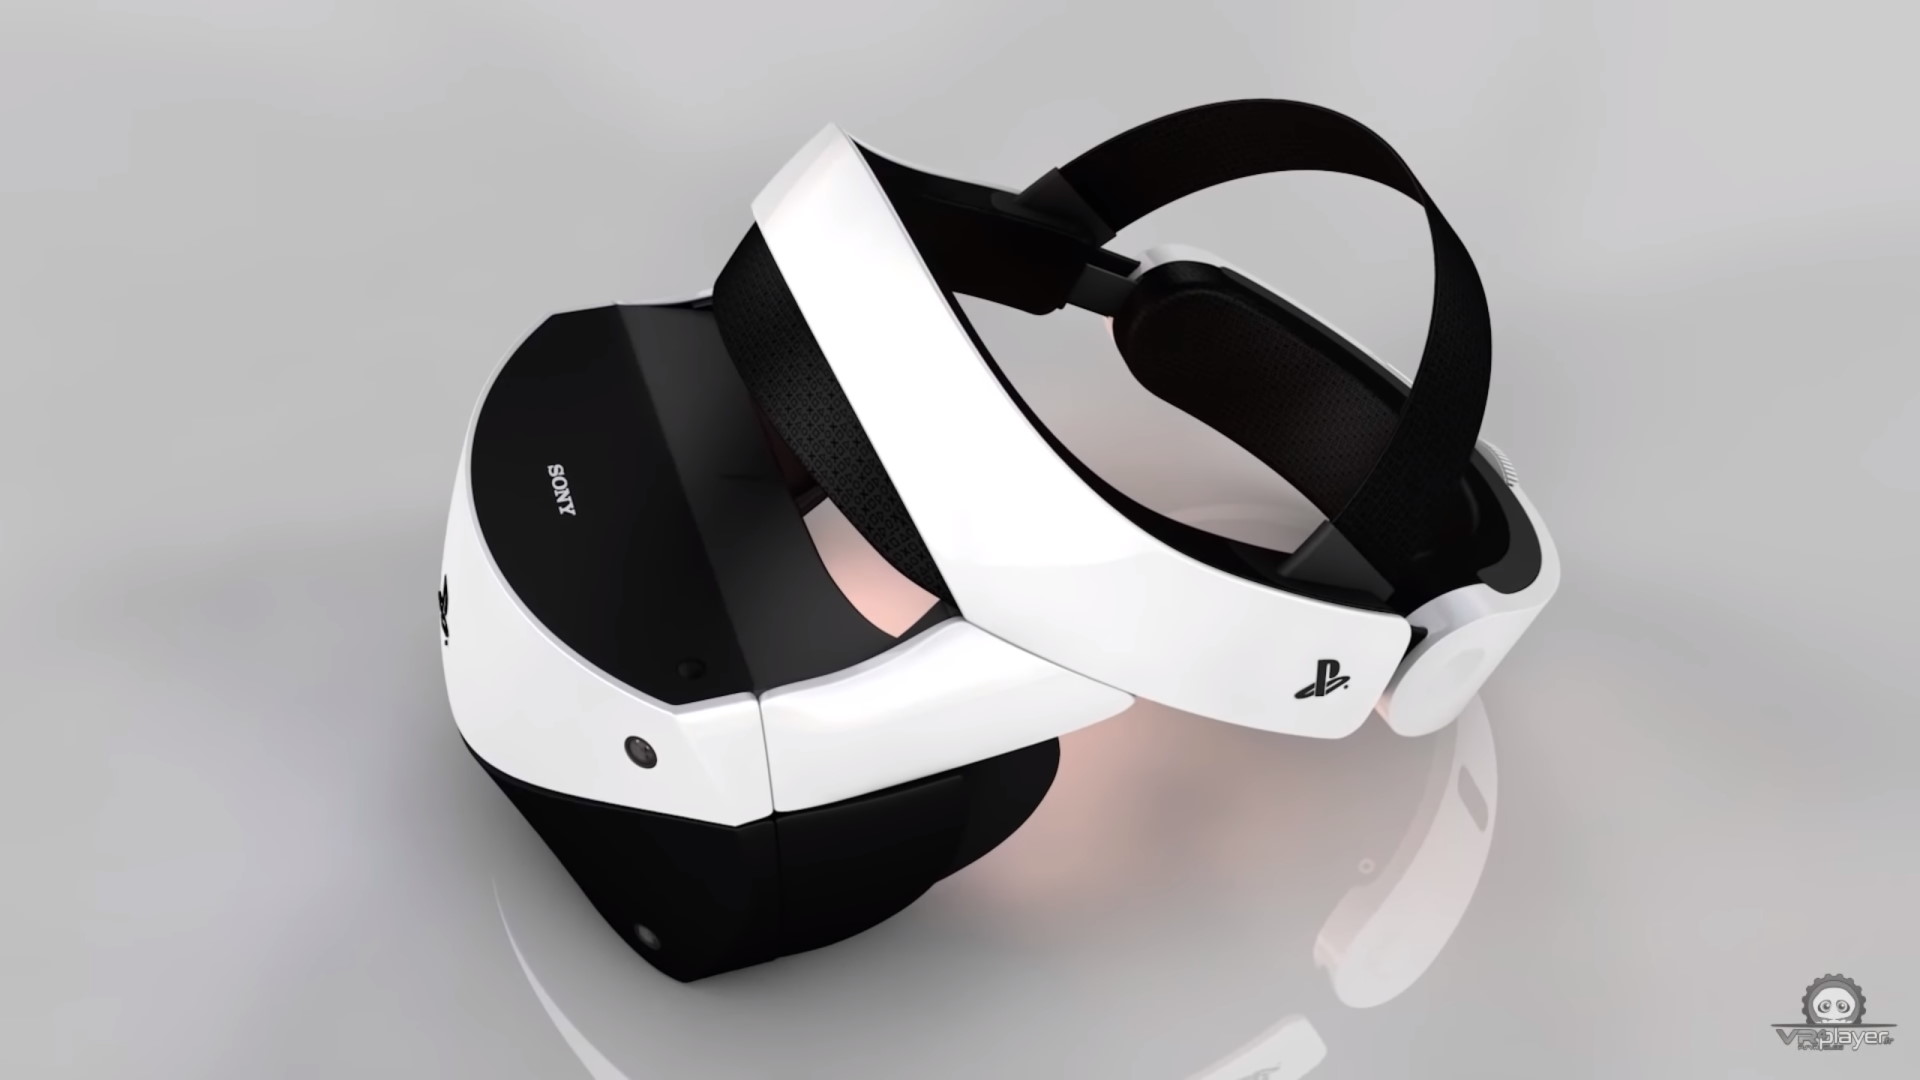 PlayStation VR 2, PSVR 2 Concept Trailer SONY